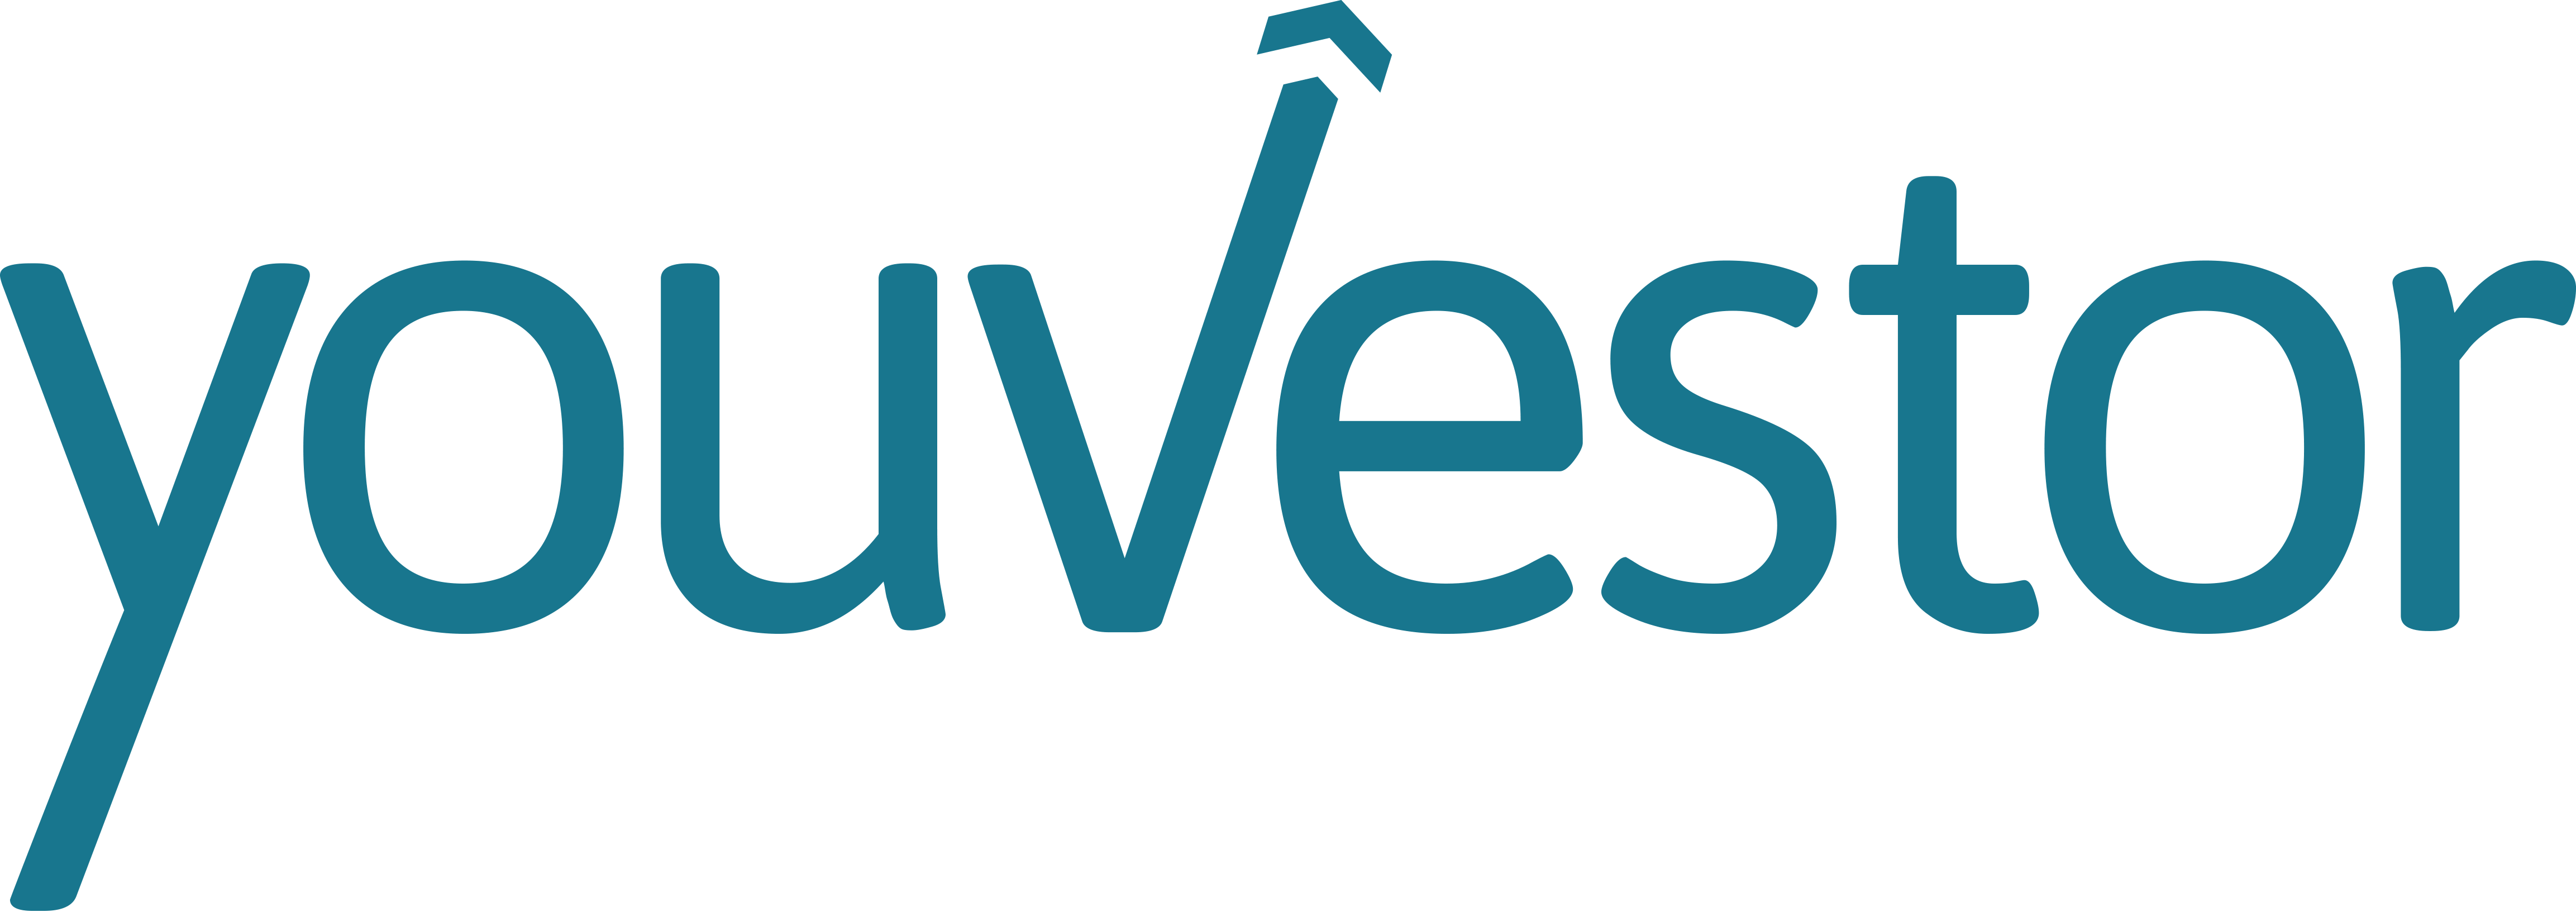 youvestor Logo